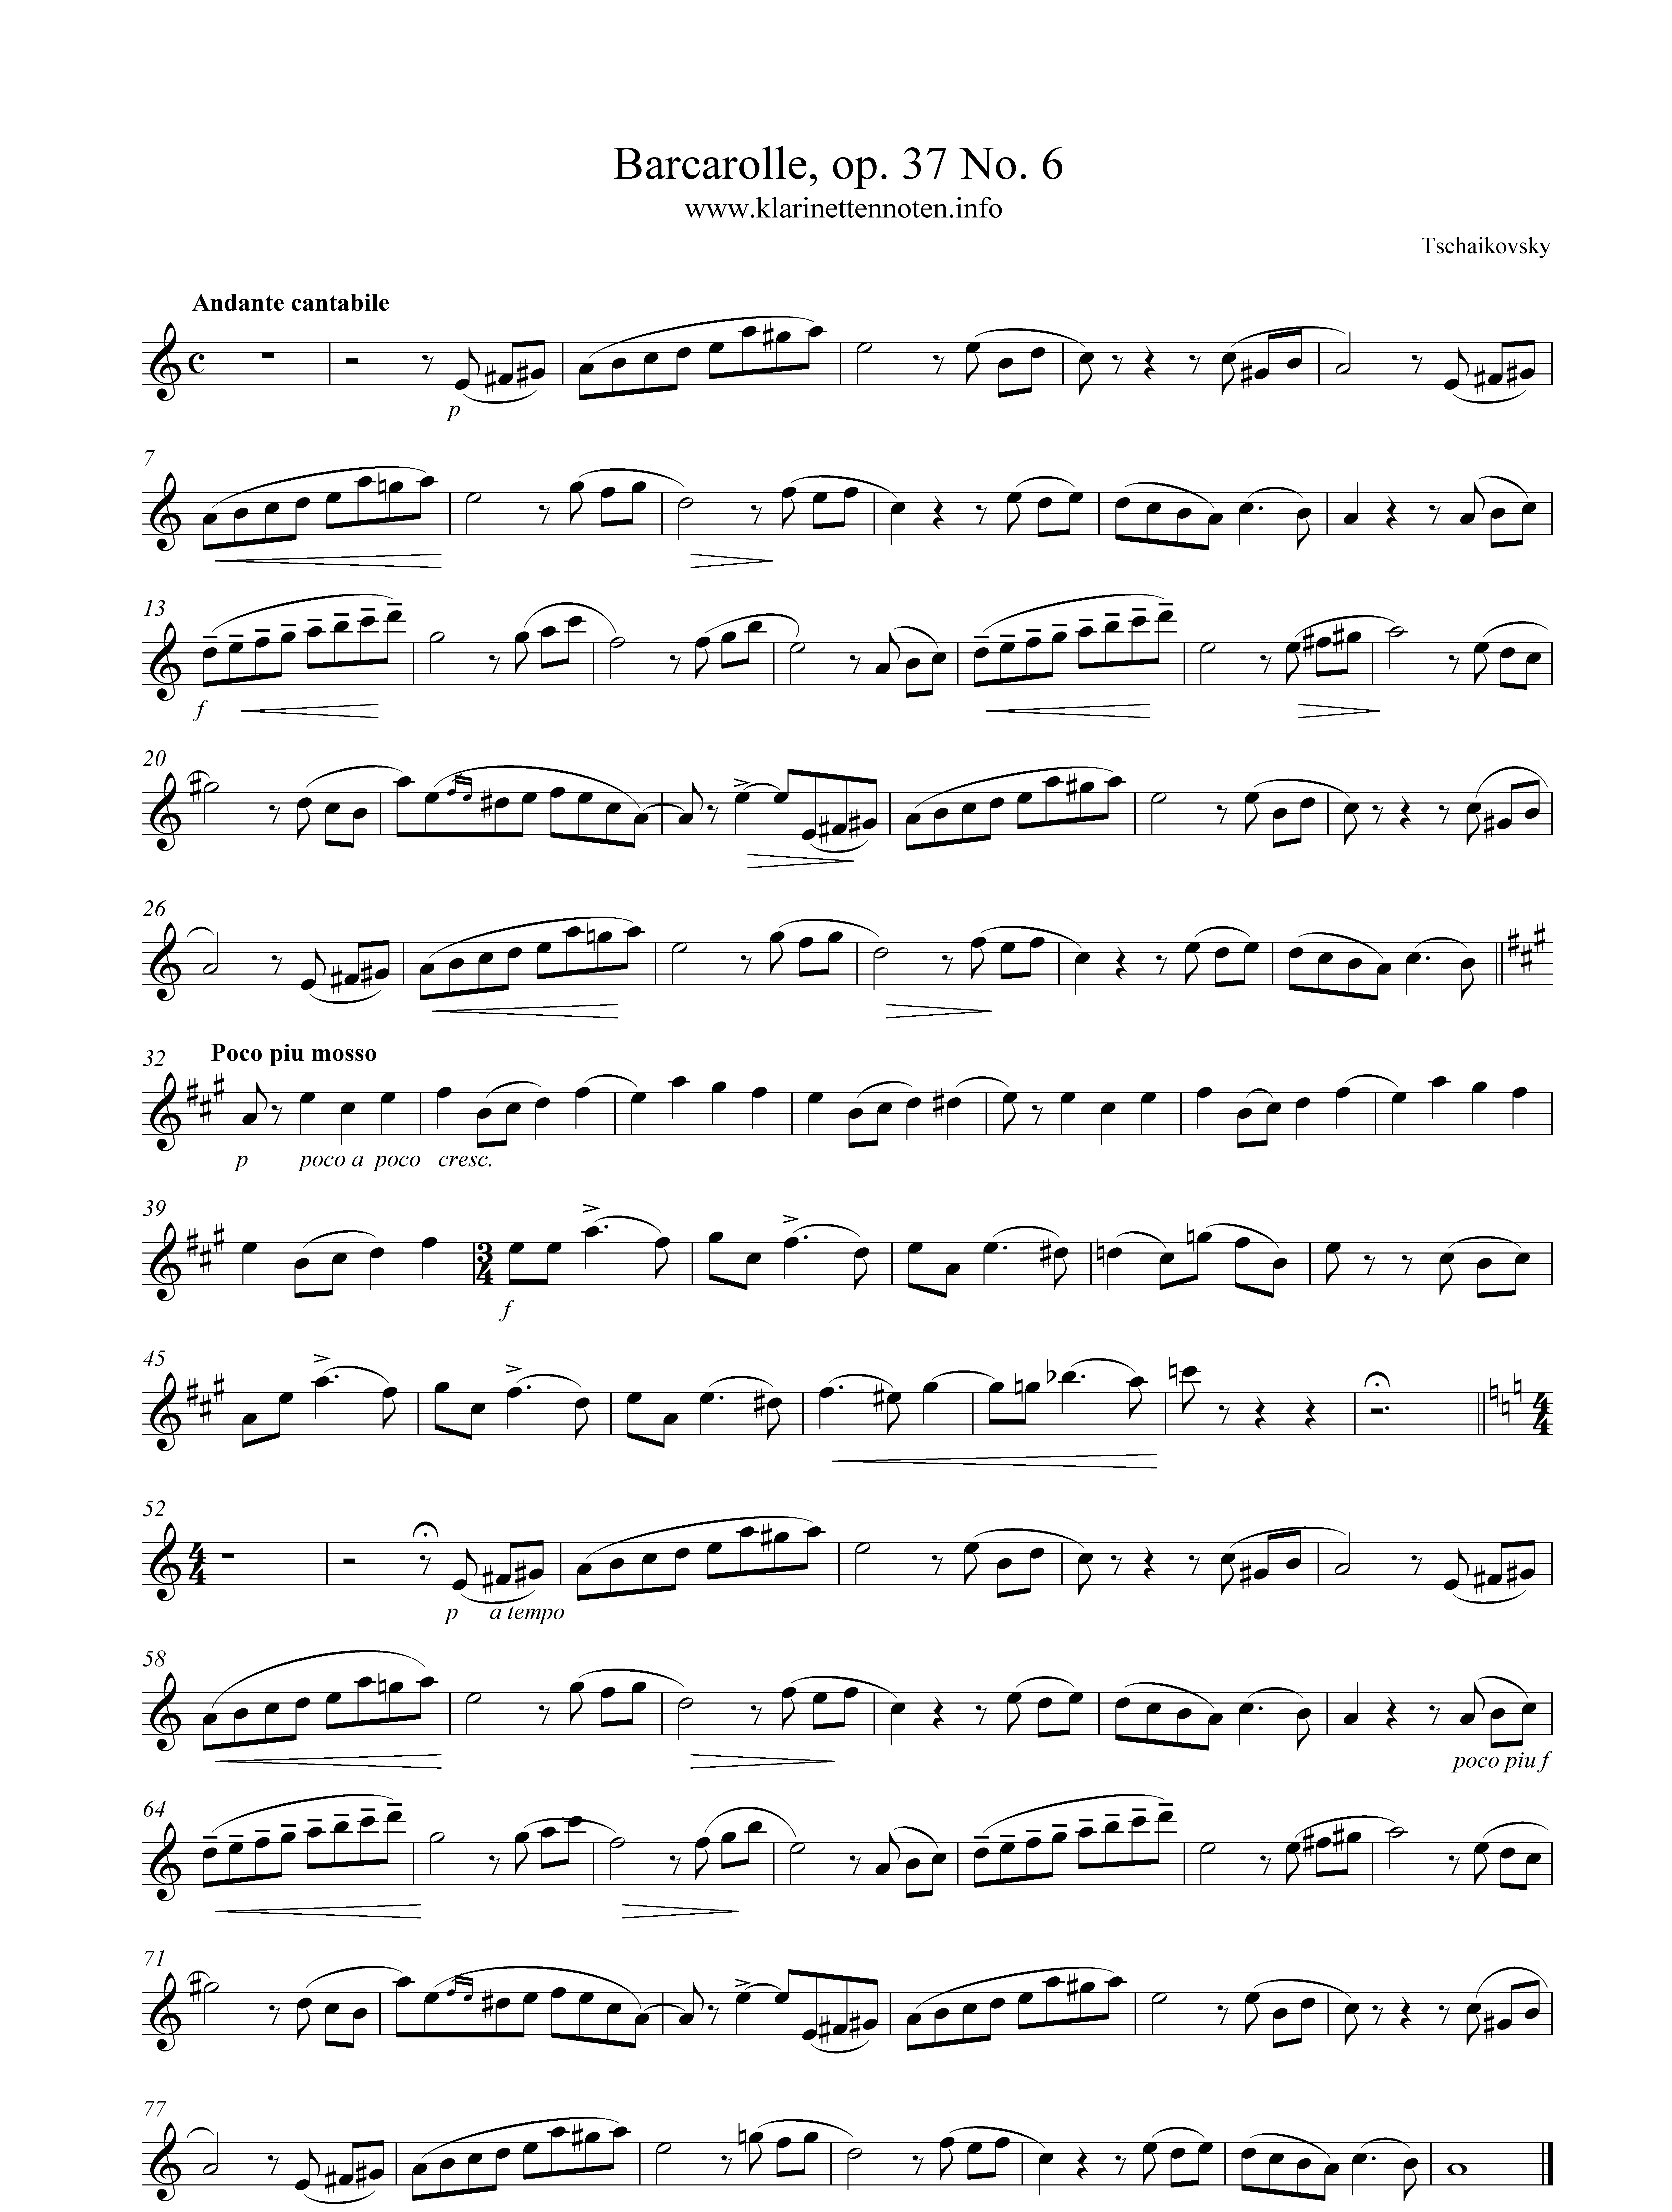 Barcarolle, op37 No.6 - Clarinet, Tschaikovsky